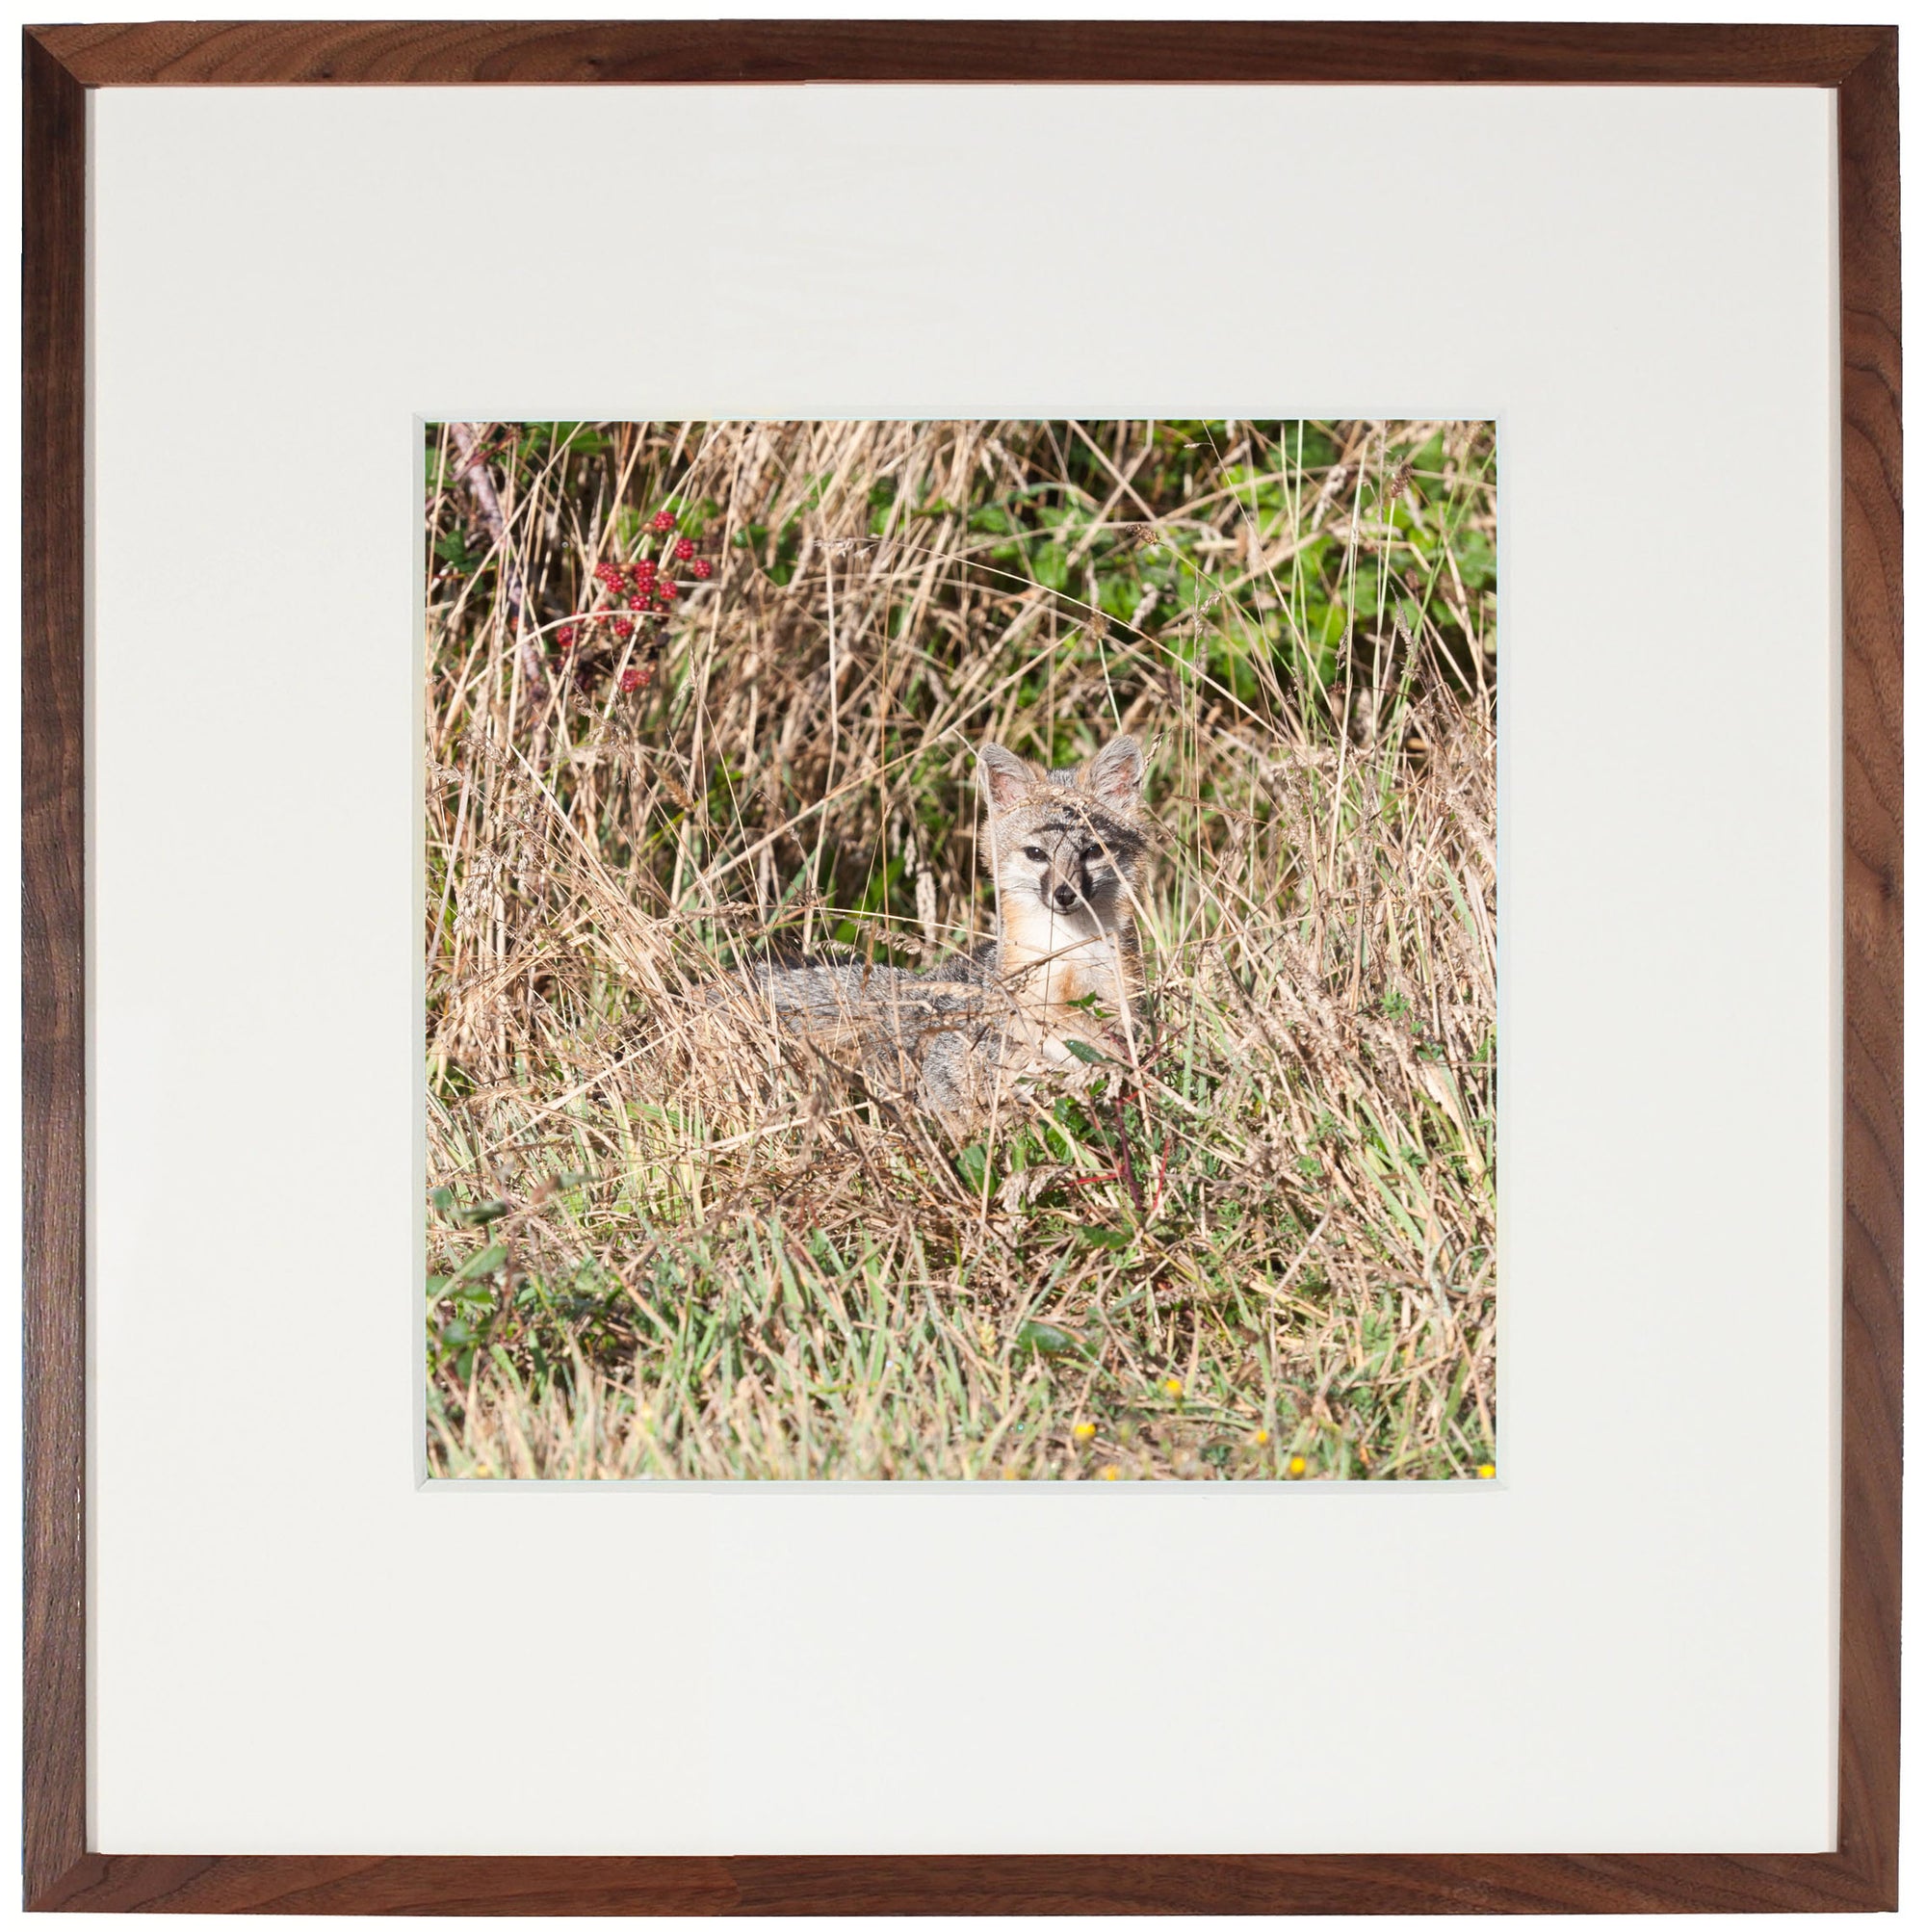 <I>California Grey Fox</I><br>Mendocino Coast, California, 2010<br><br>GC0410